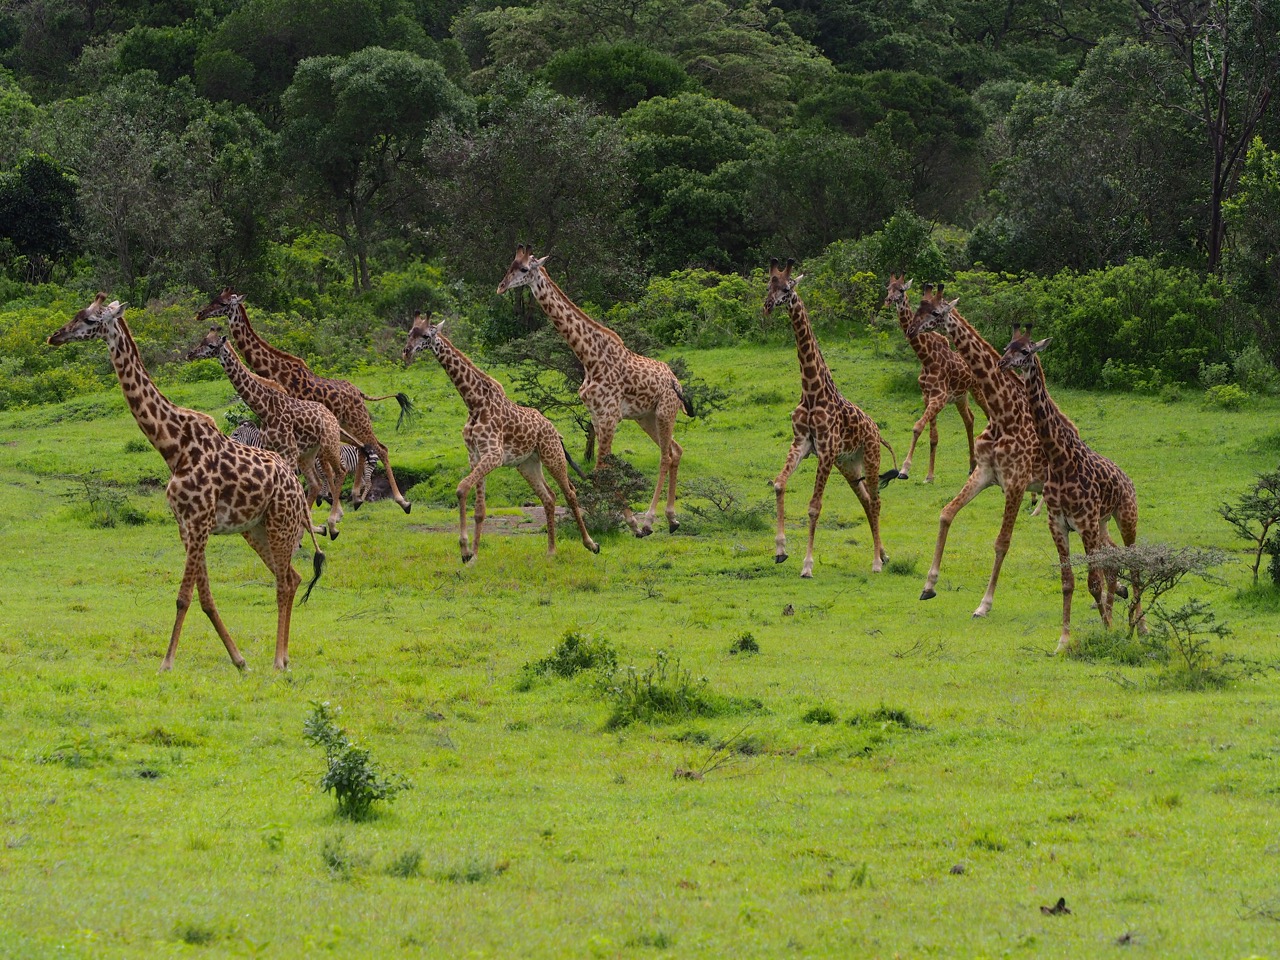 Arusha National park